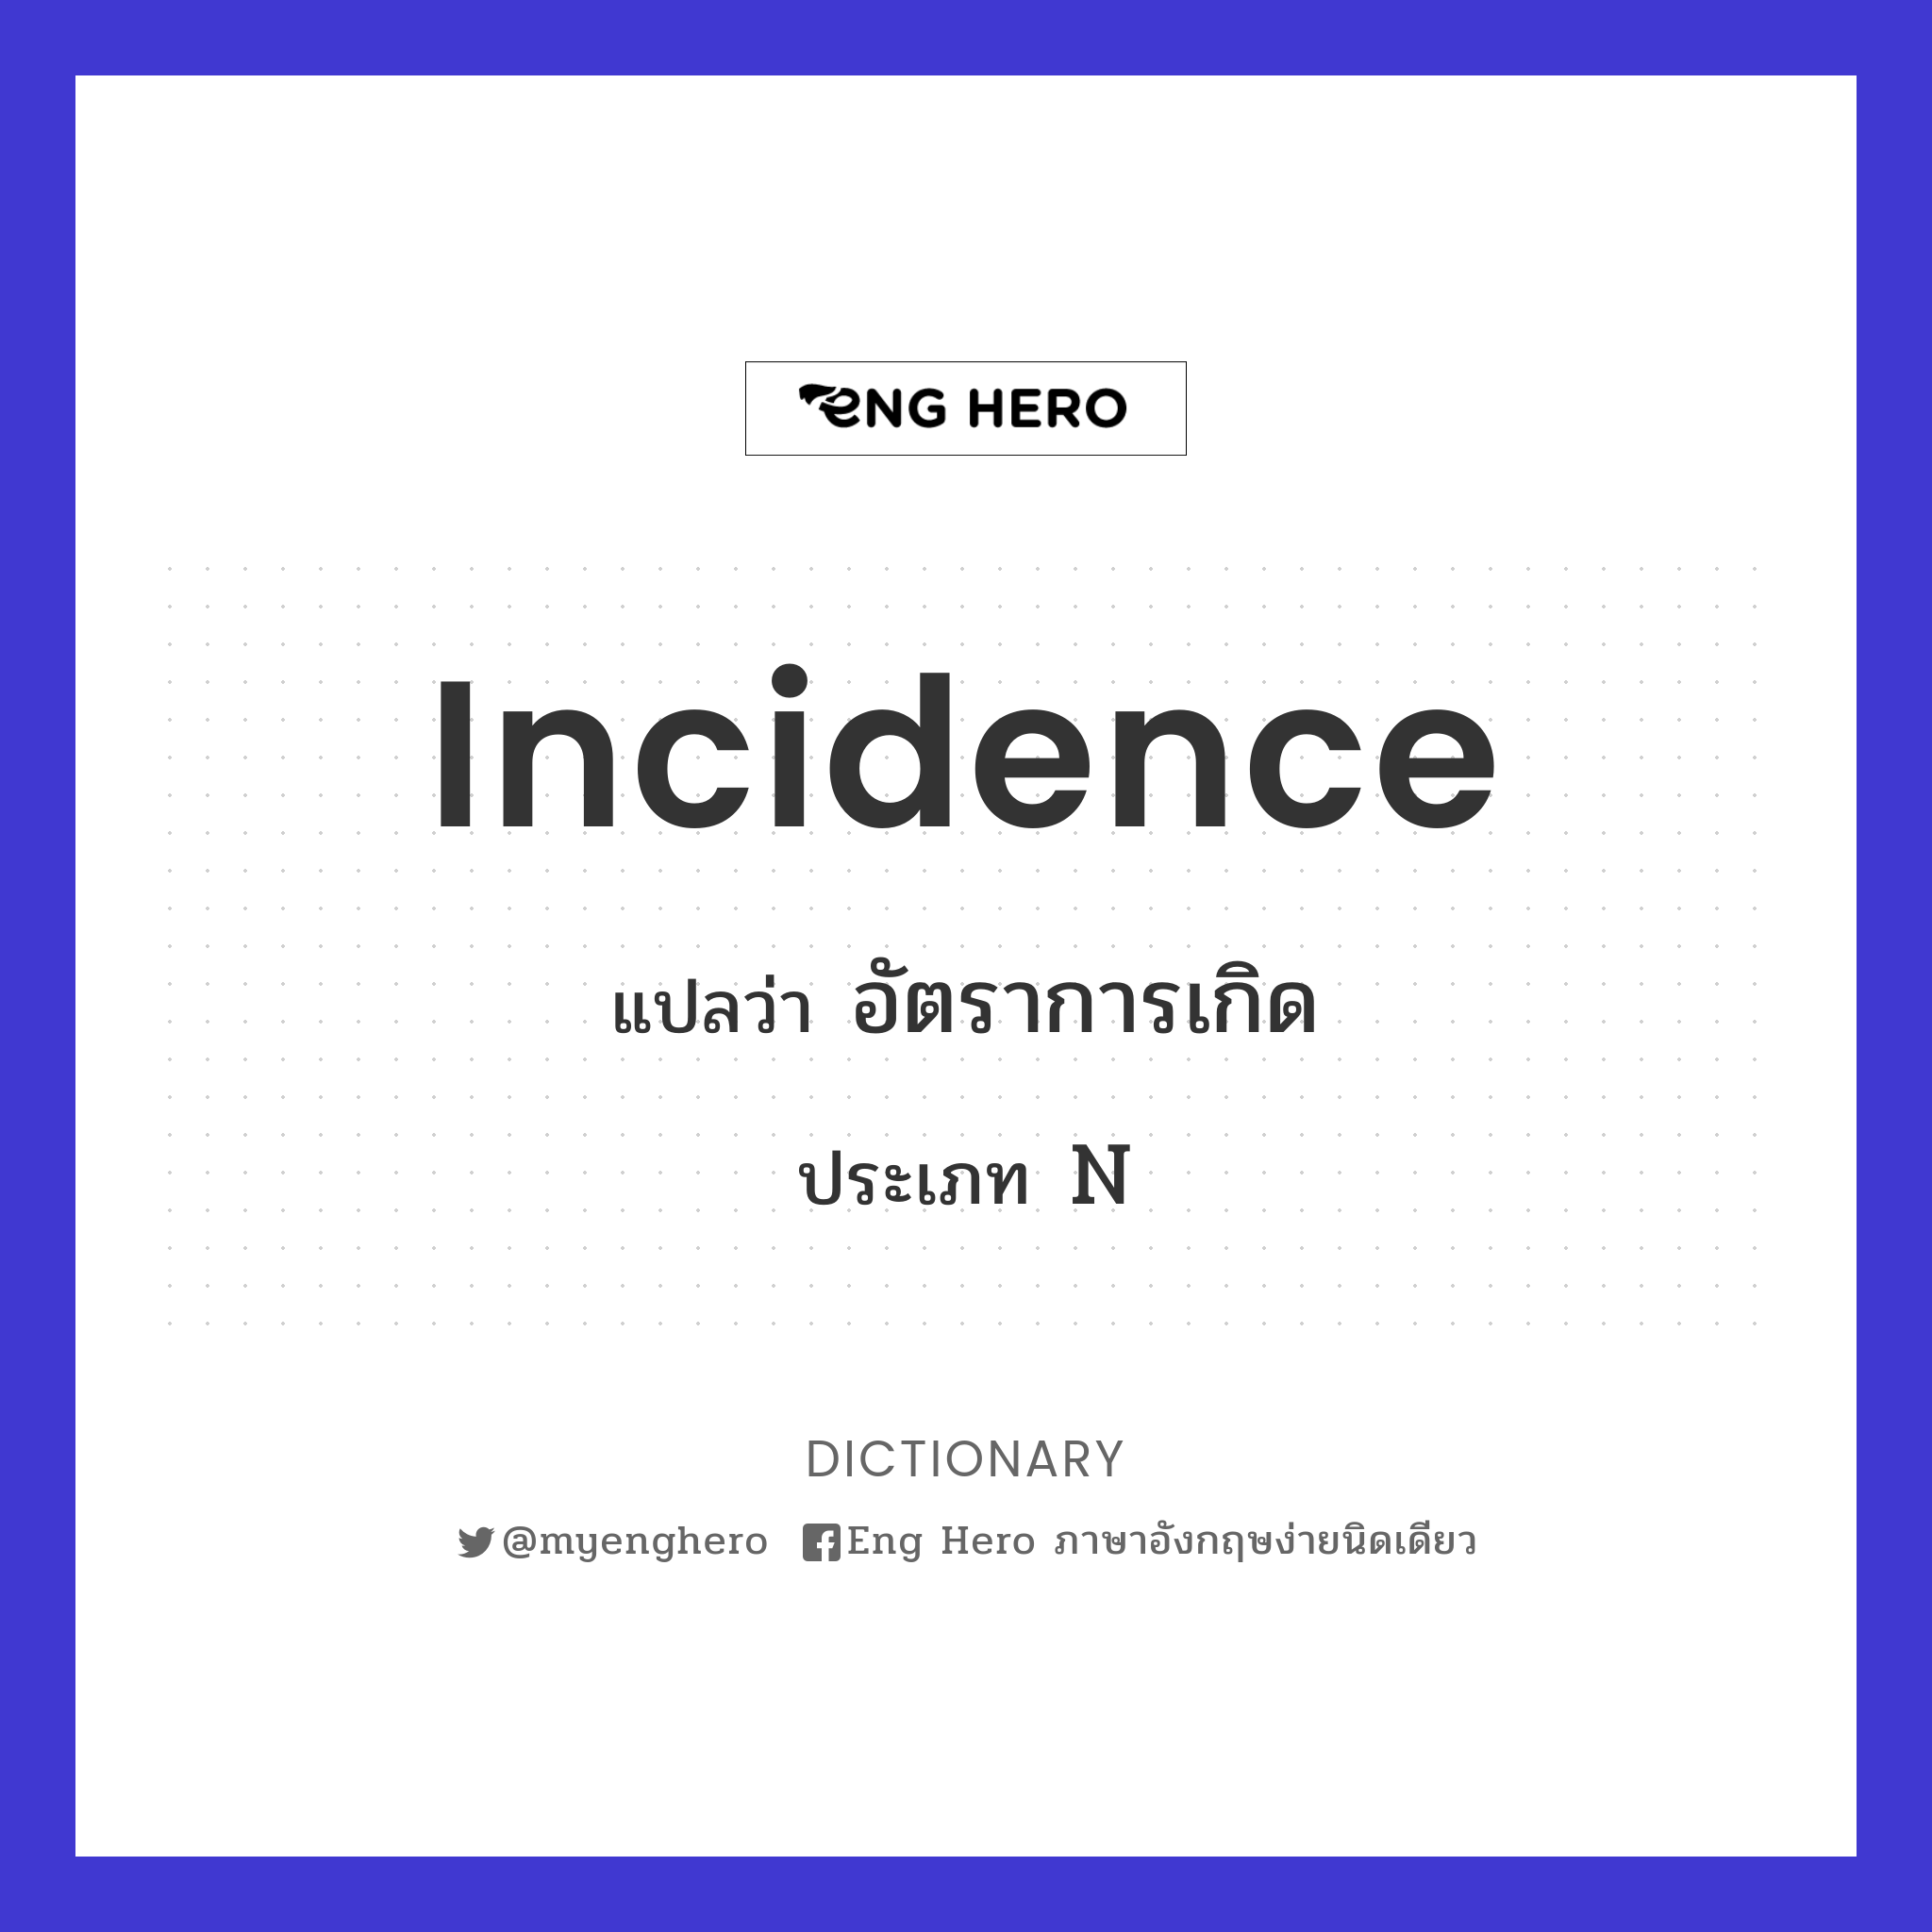 incidence